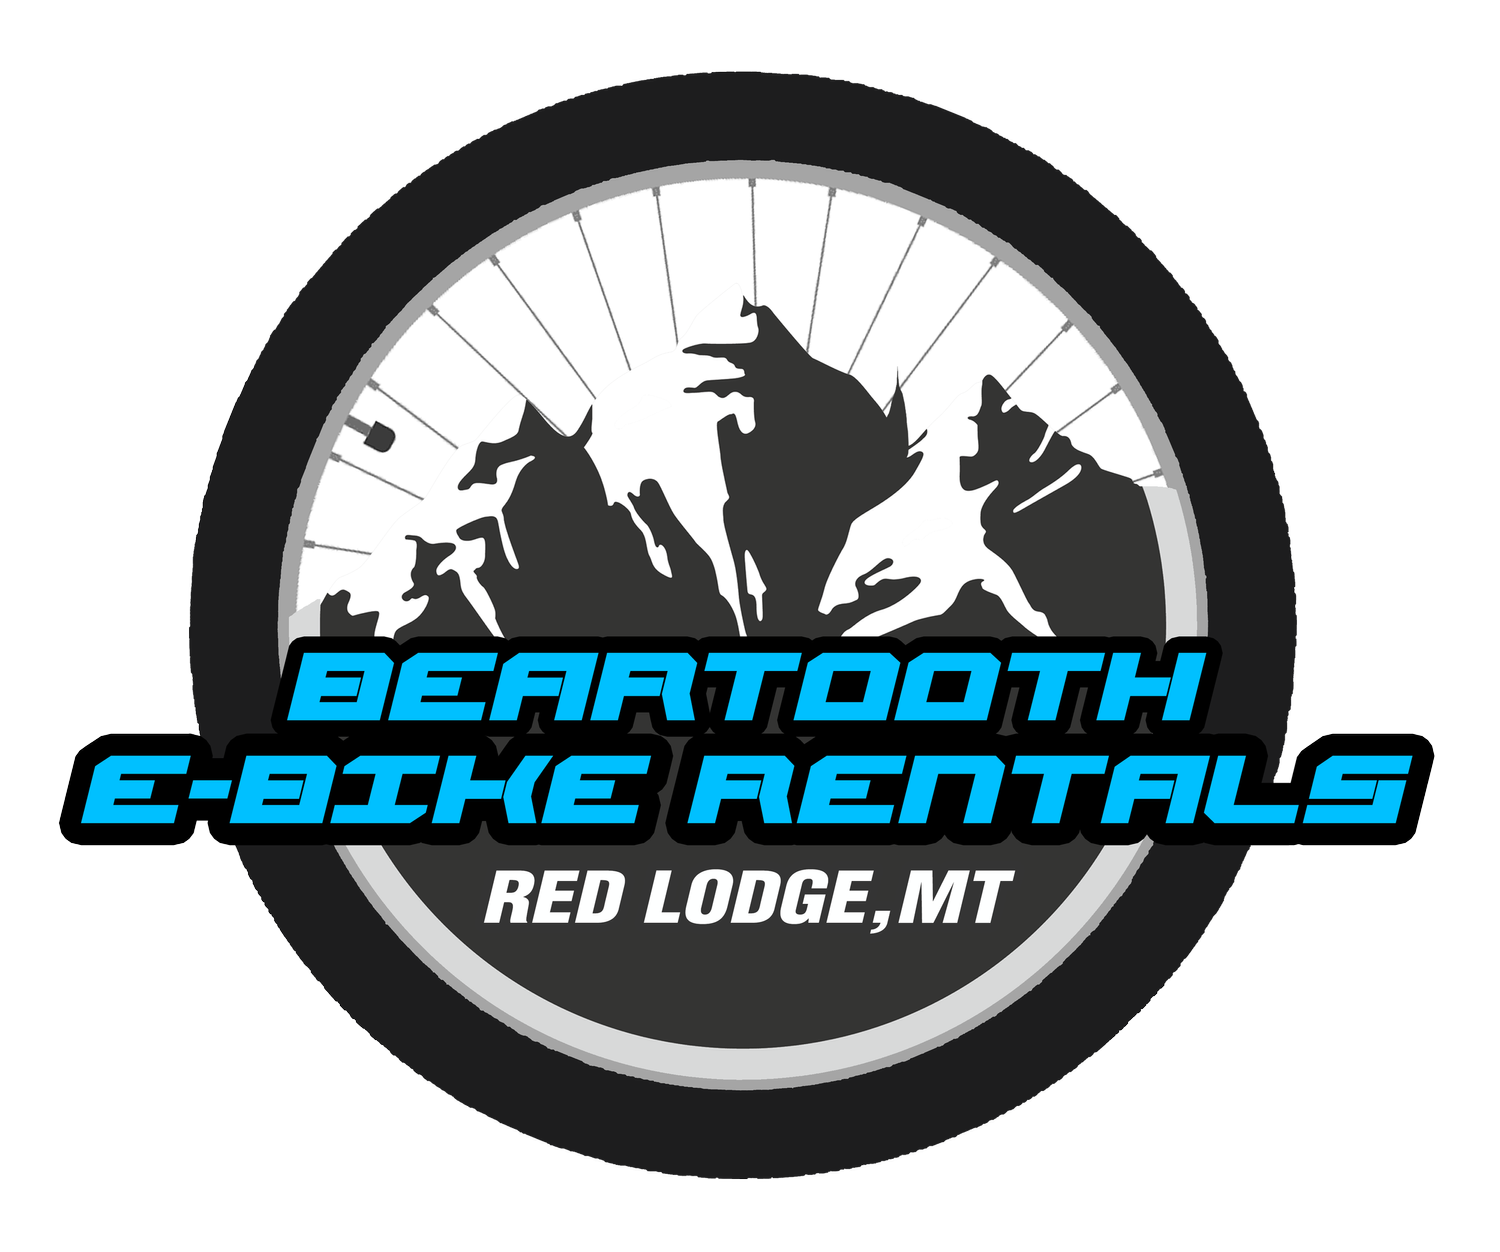 Beartooth E-Bike Rentals